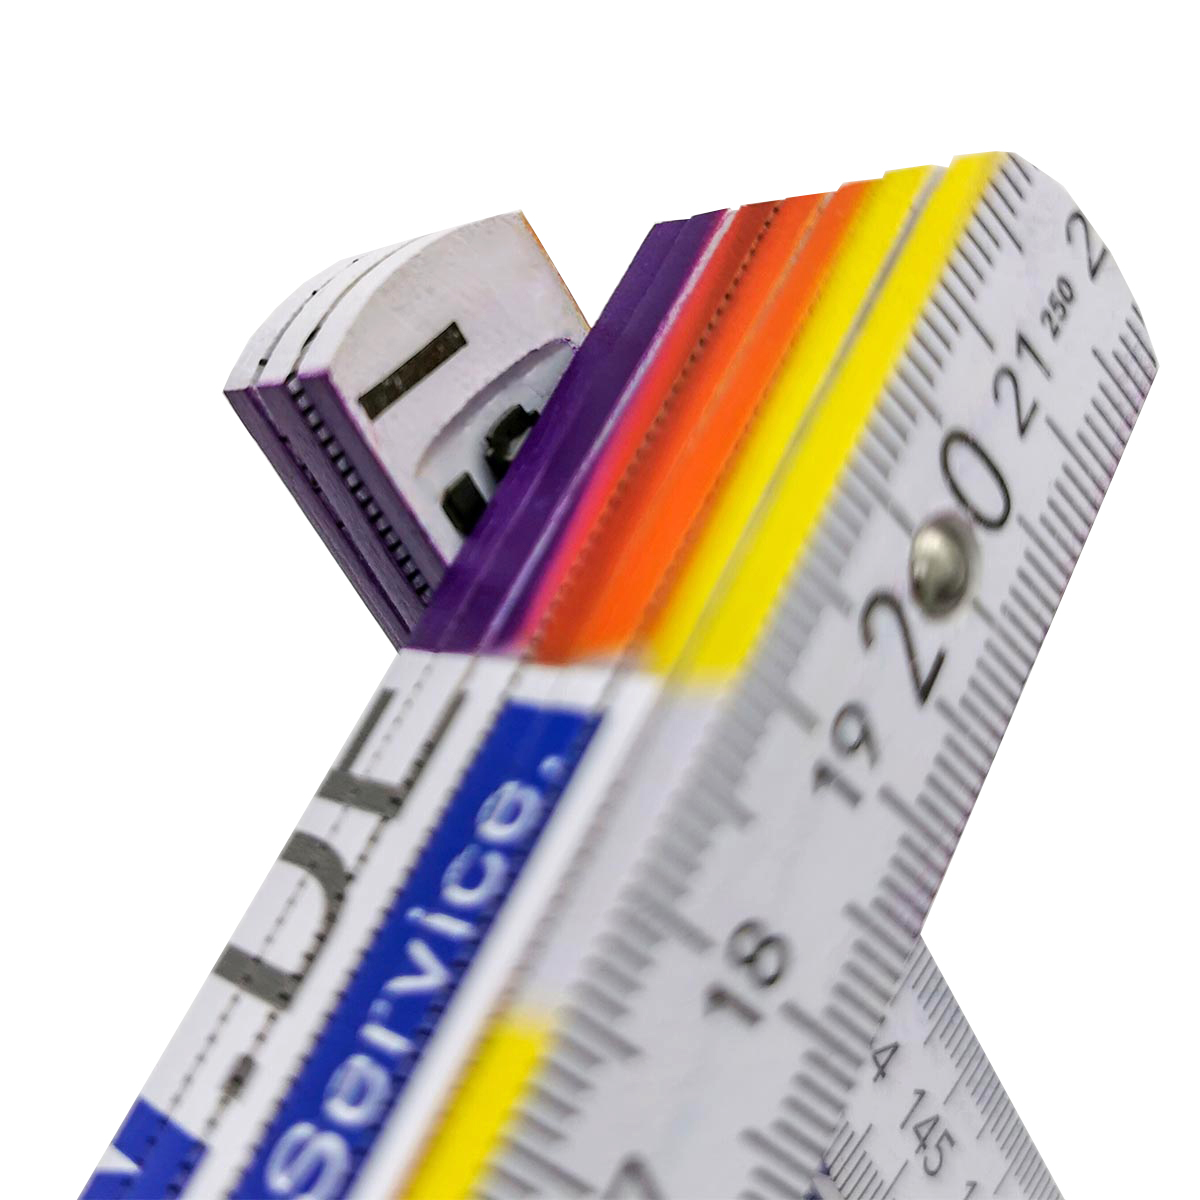 ADGA 250 weiß - 2m Zollstock Meterstab Gliedermaßstab mit Druck Fotodruck 4-farbig